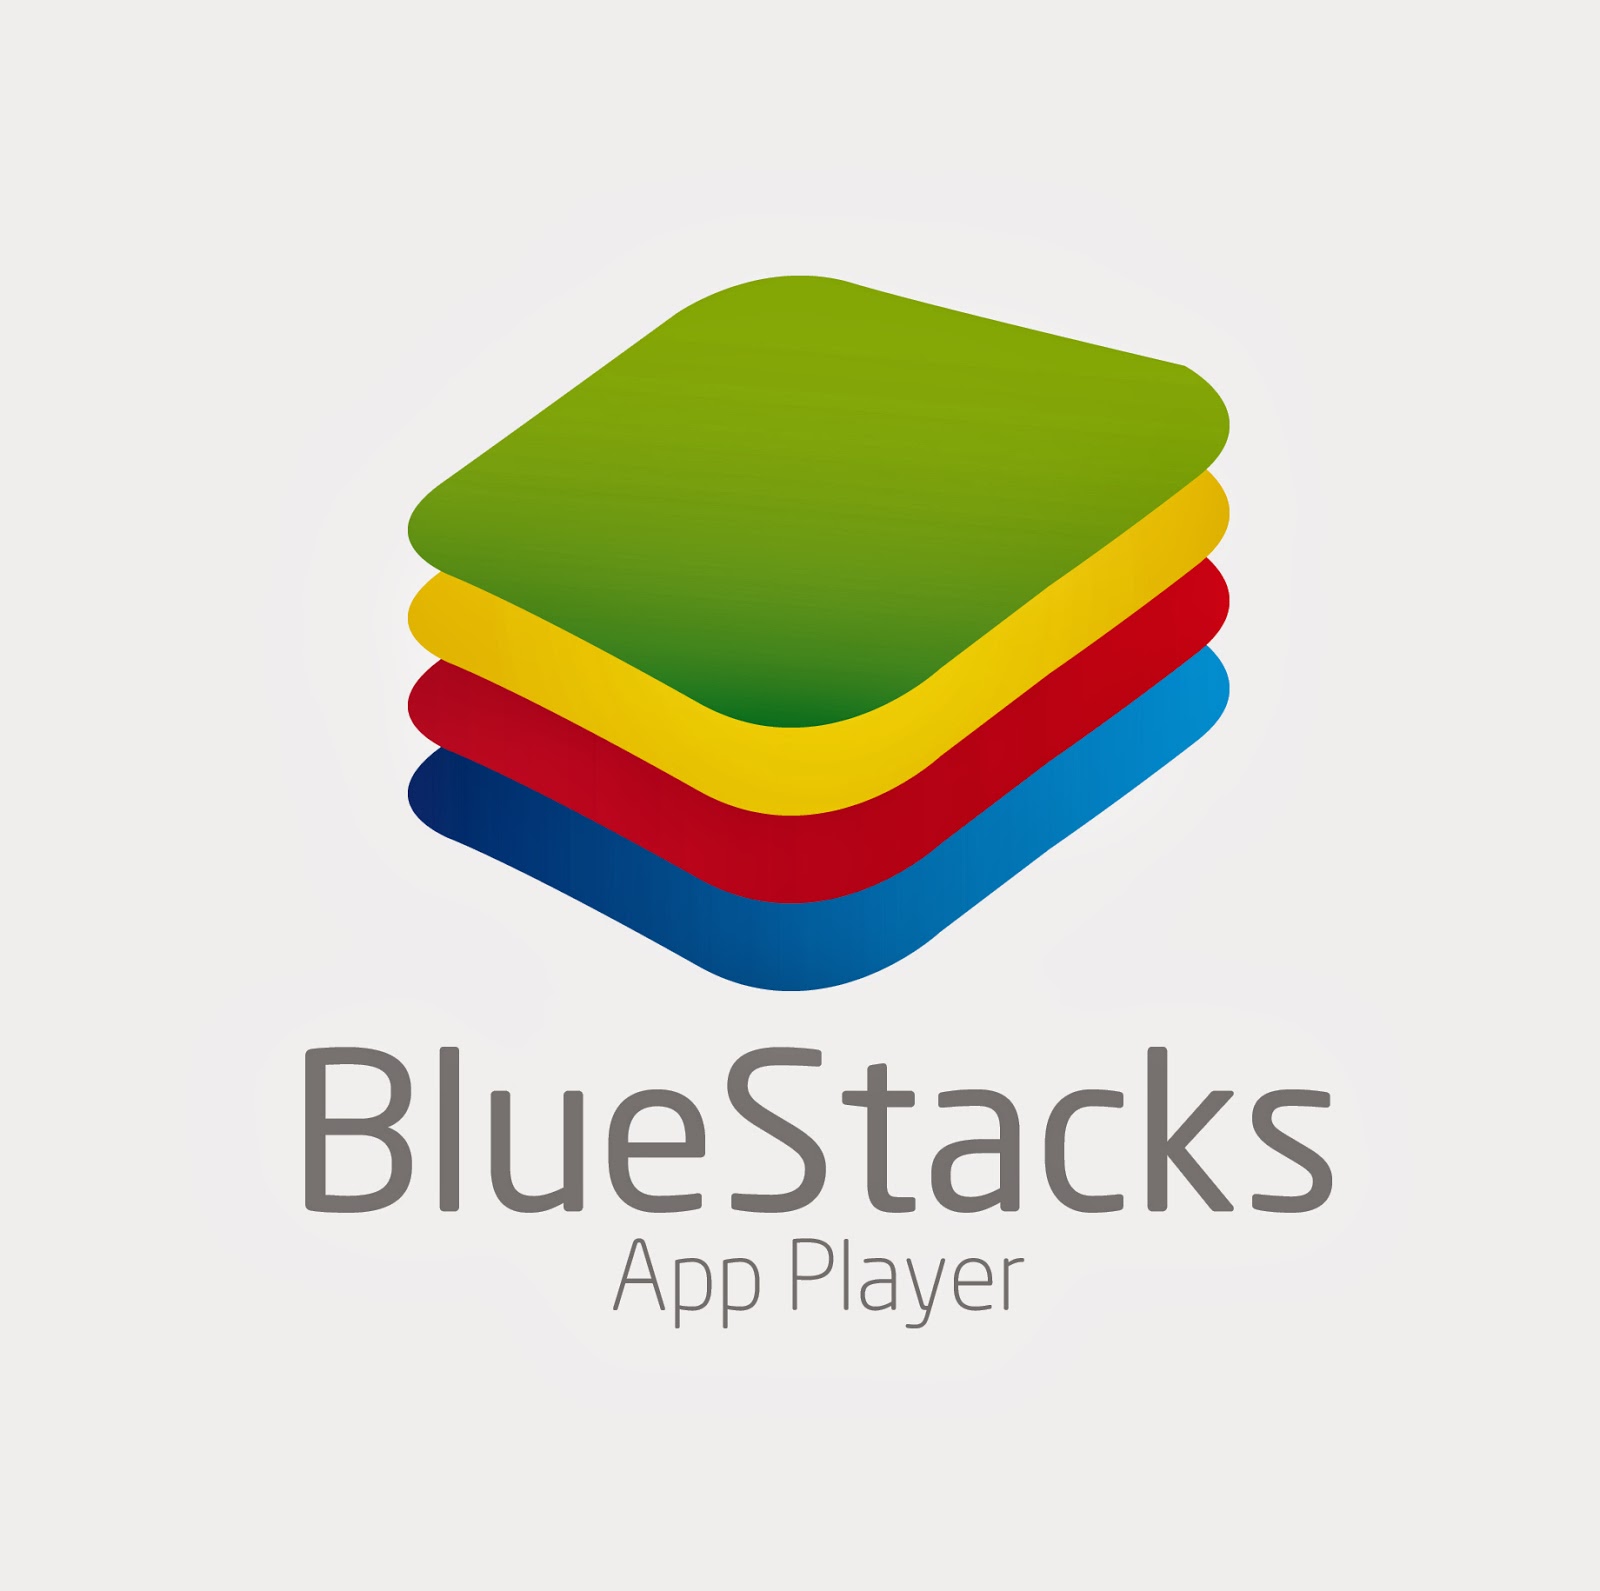 bluestacks play store download